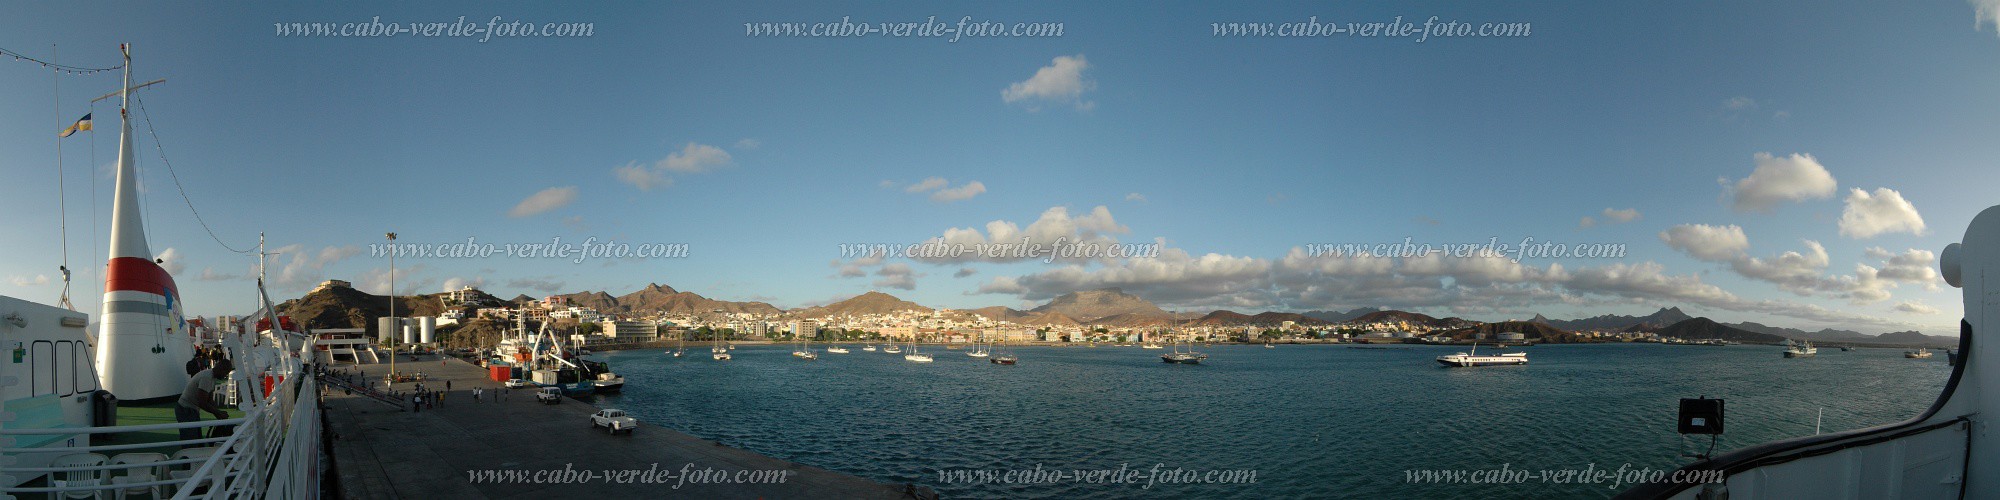 So Vicente : Mindelo : waterfront : Landscape SeaCabo Verde Foto Gallery